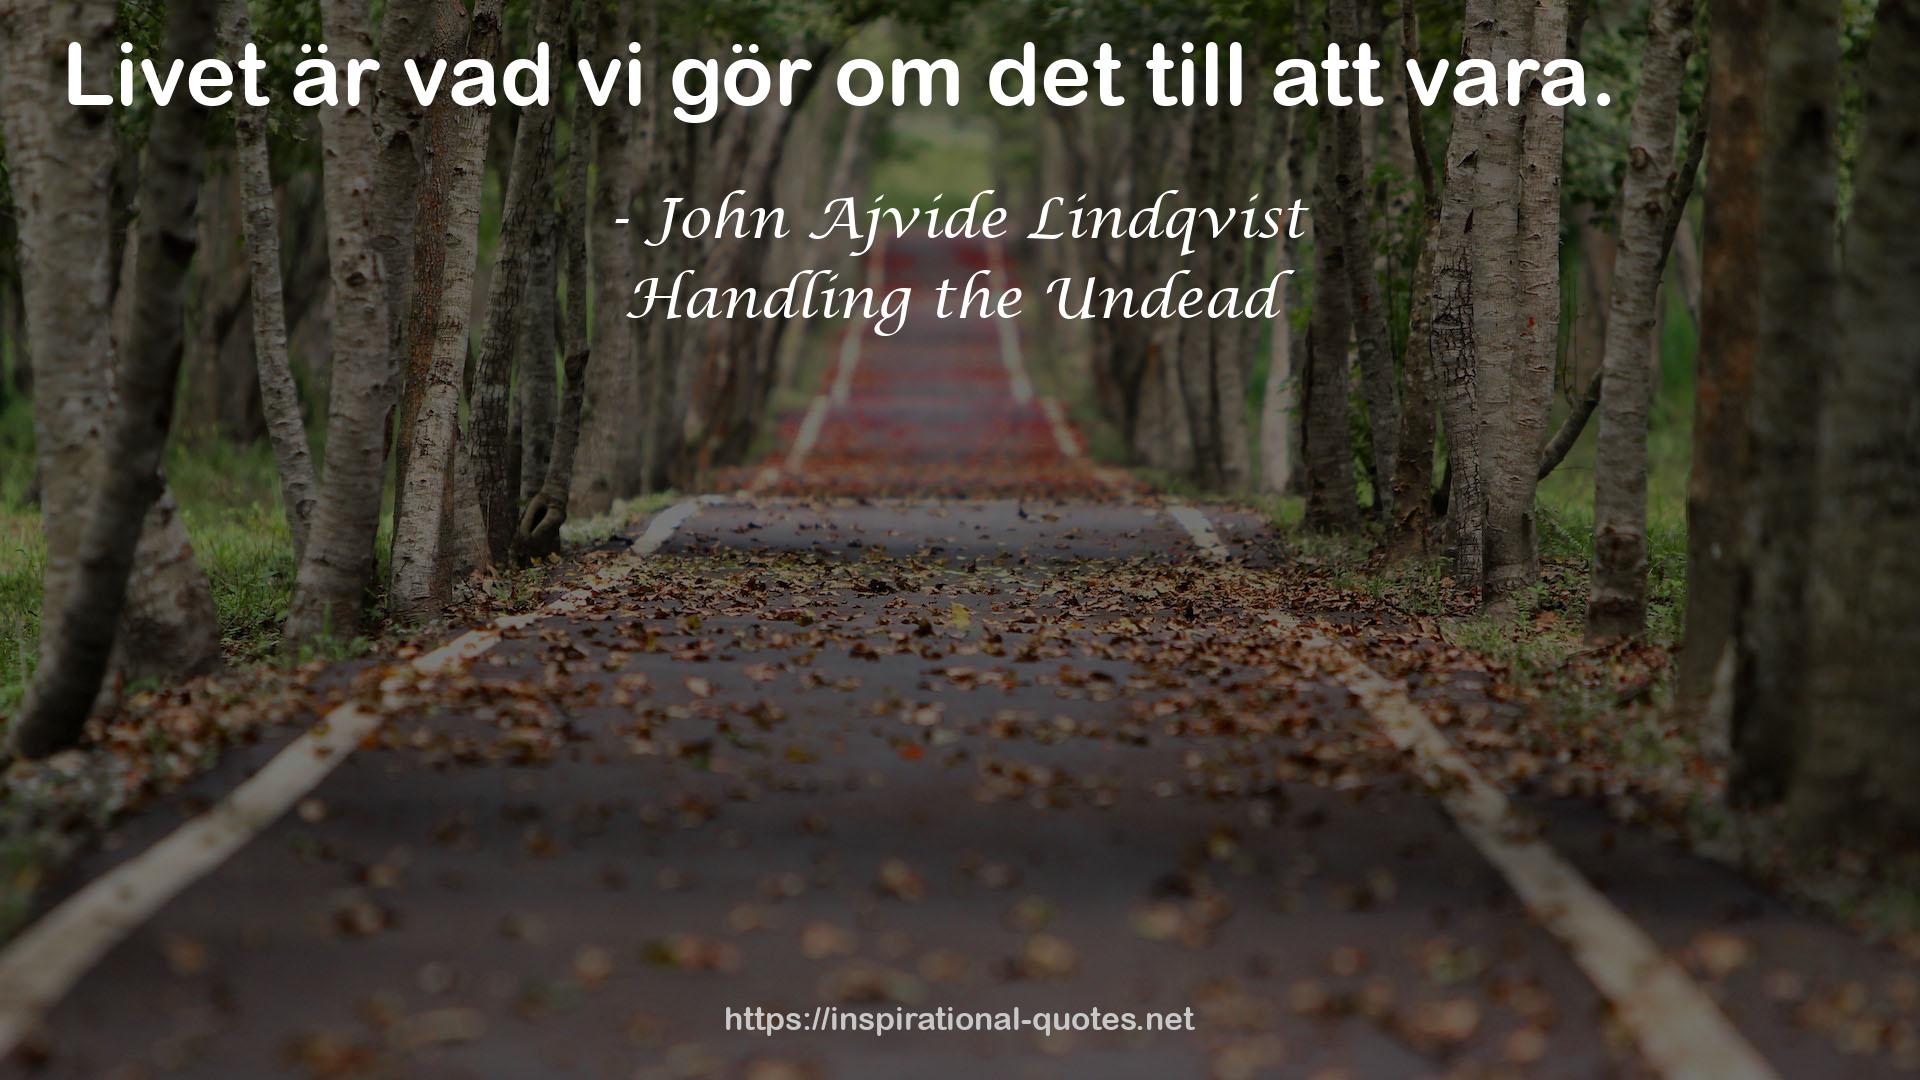 John Ajvide Lindqvist QUOTES